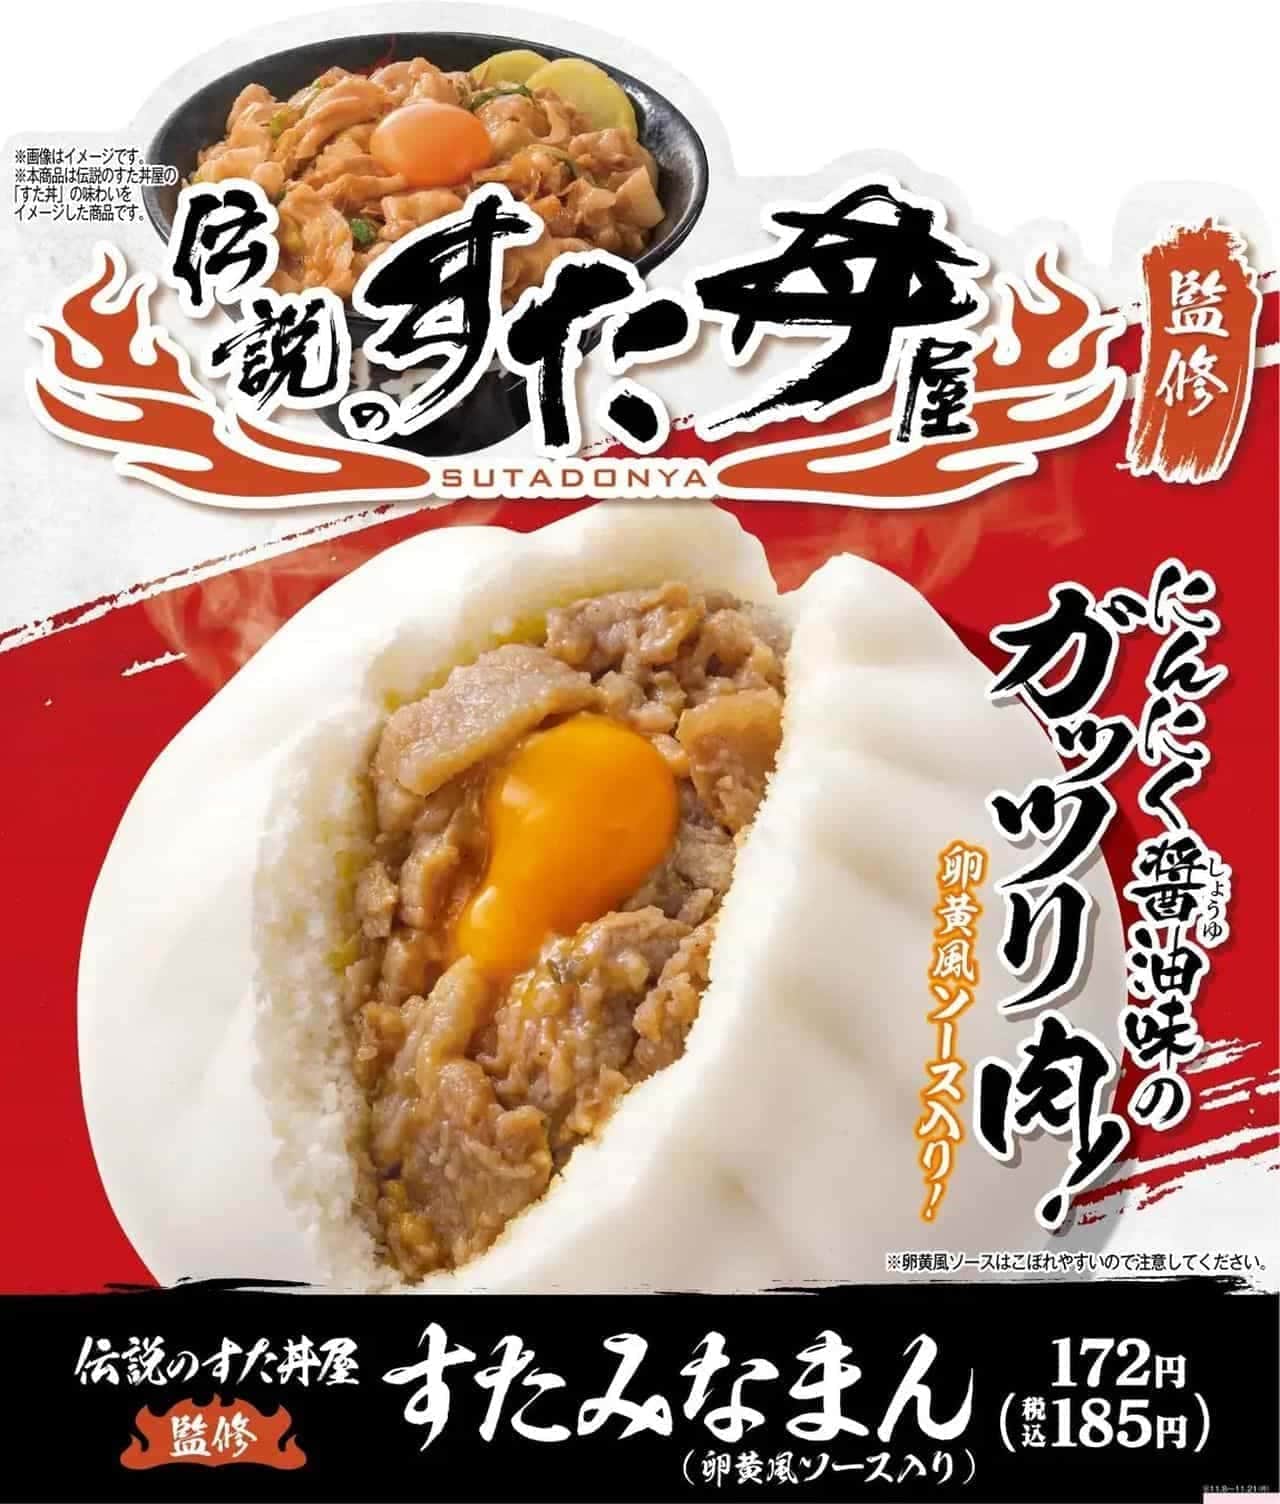 FamilyMart Chinese steamed buns "Legendary Sutadon-ya supervised Sutaminaman (with egg yolk-style sauce)".